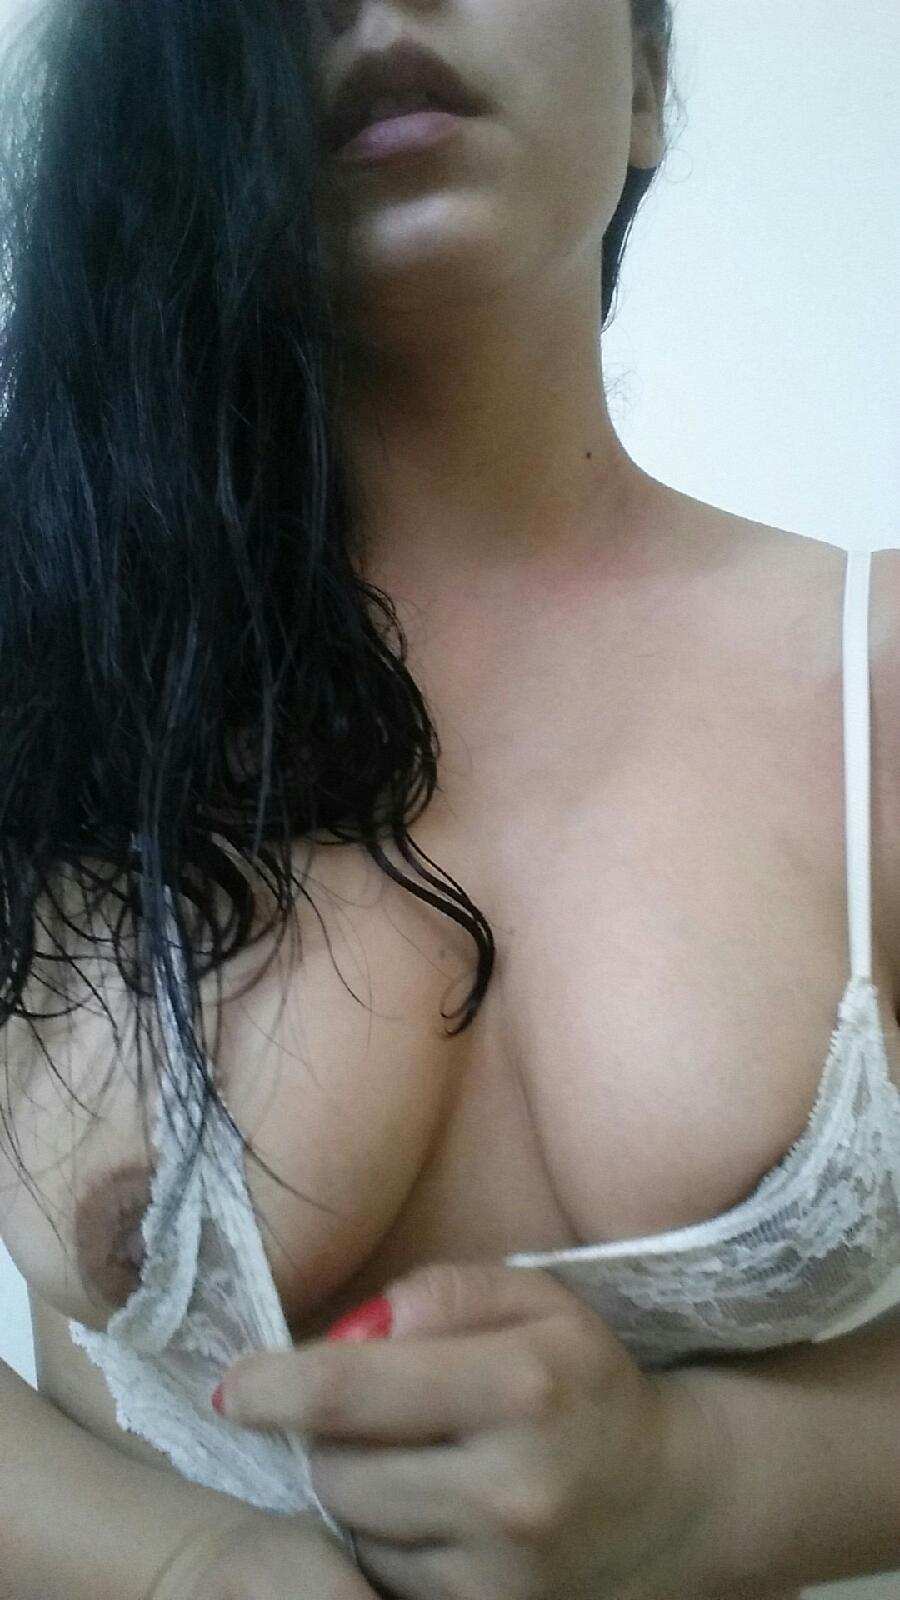 Who wants to suck big nipples